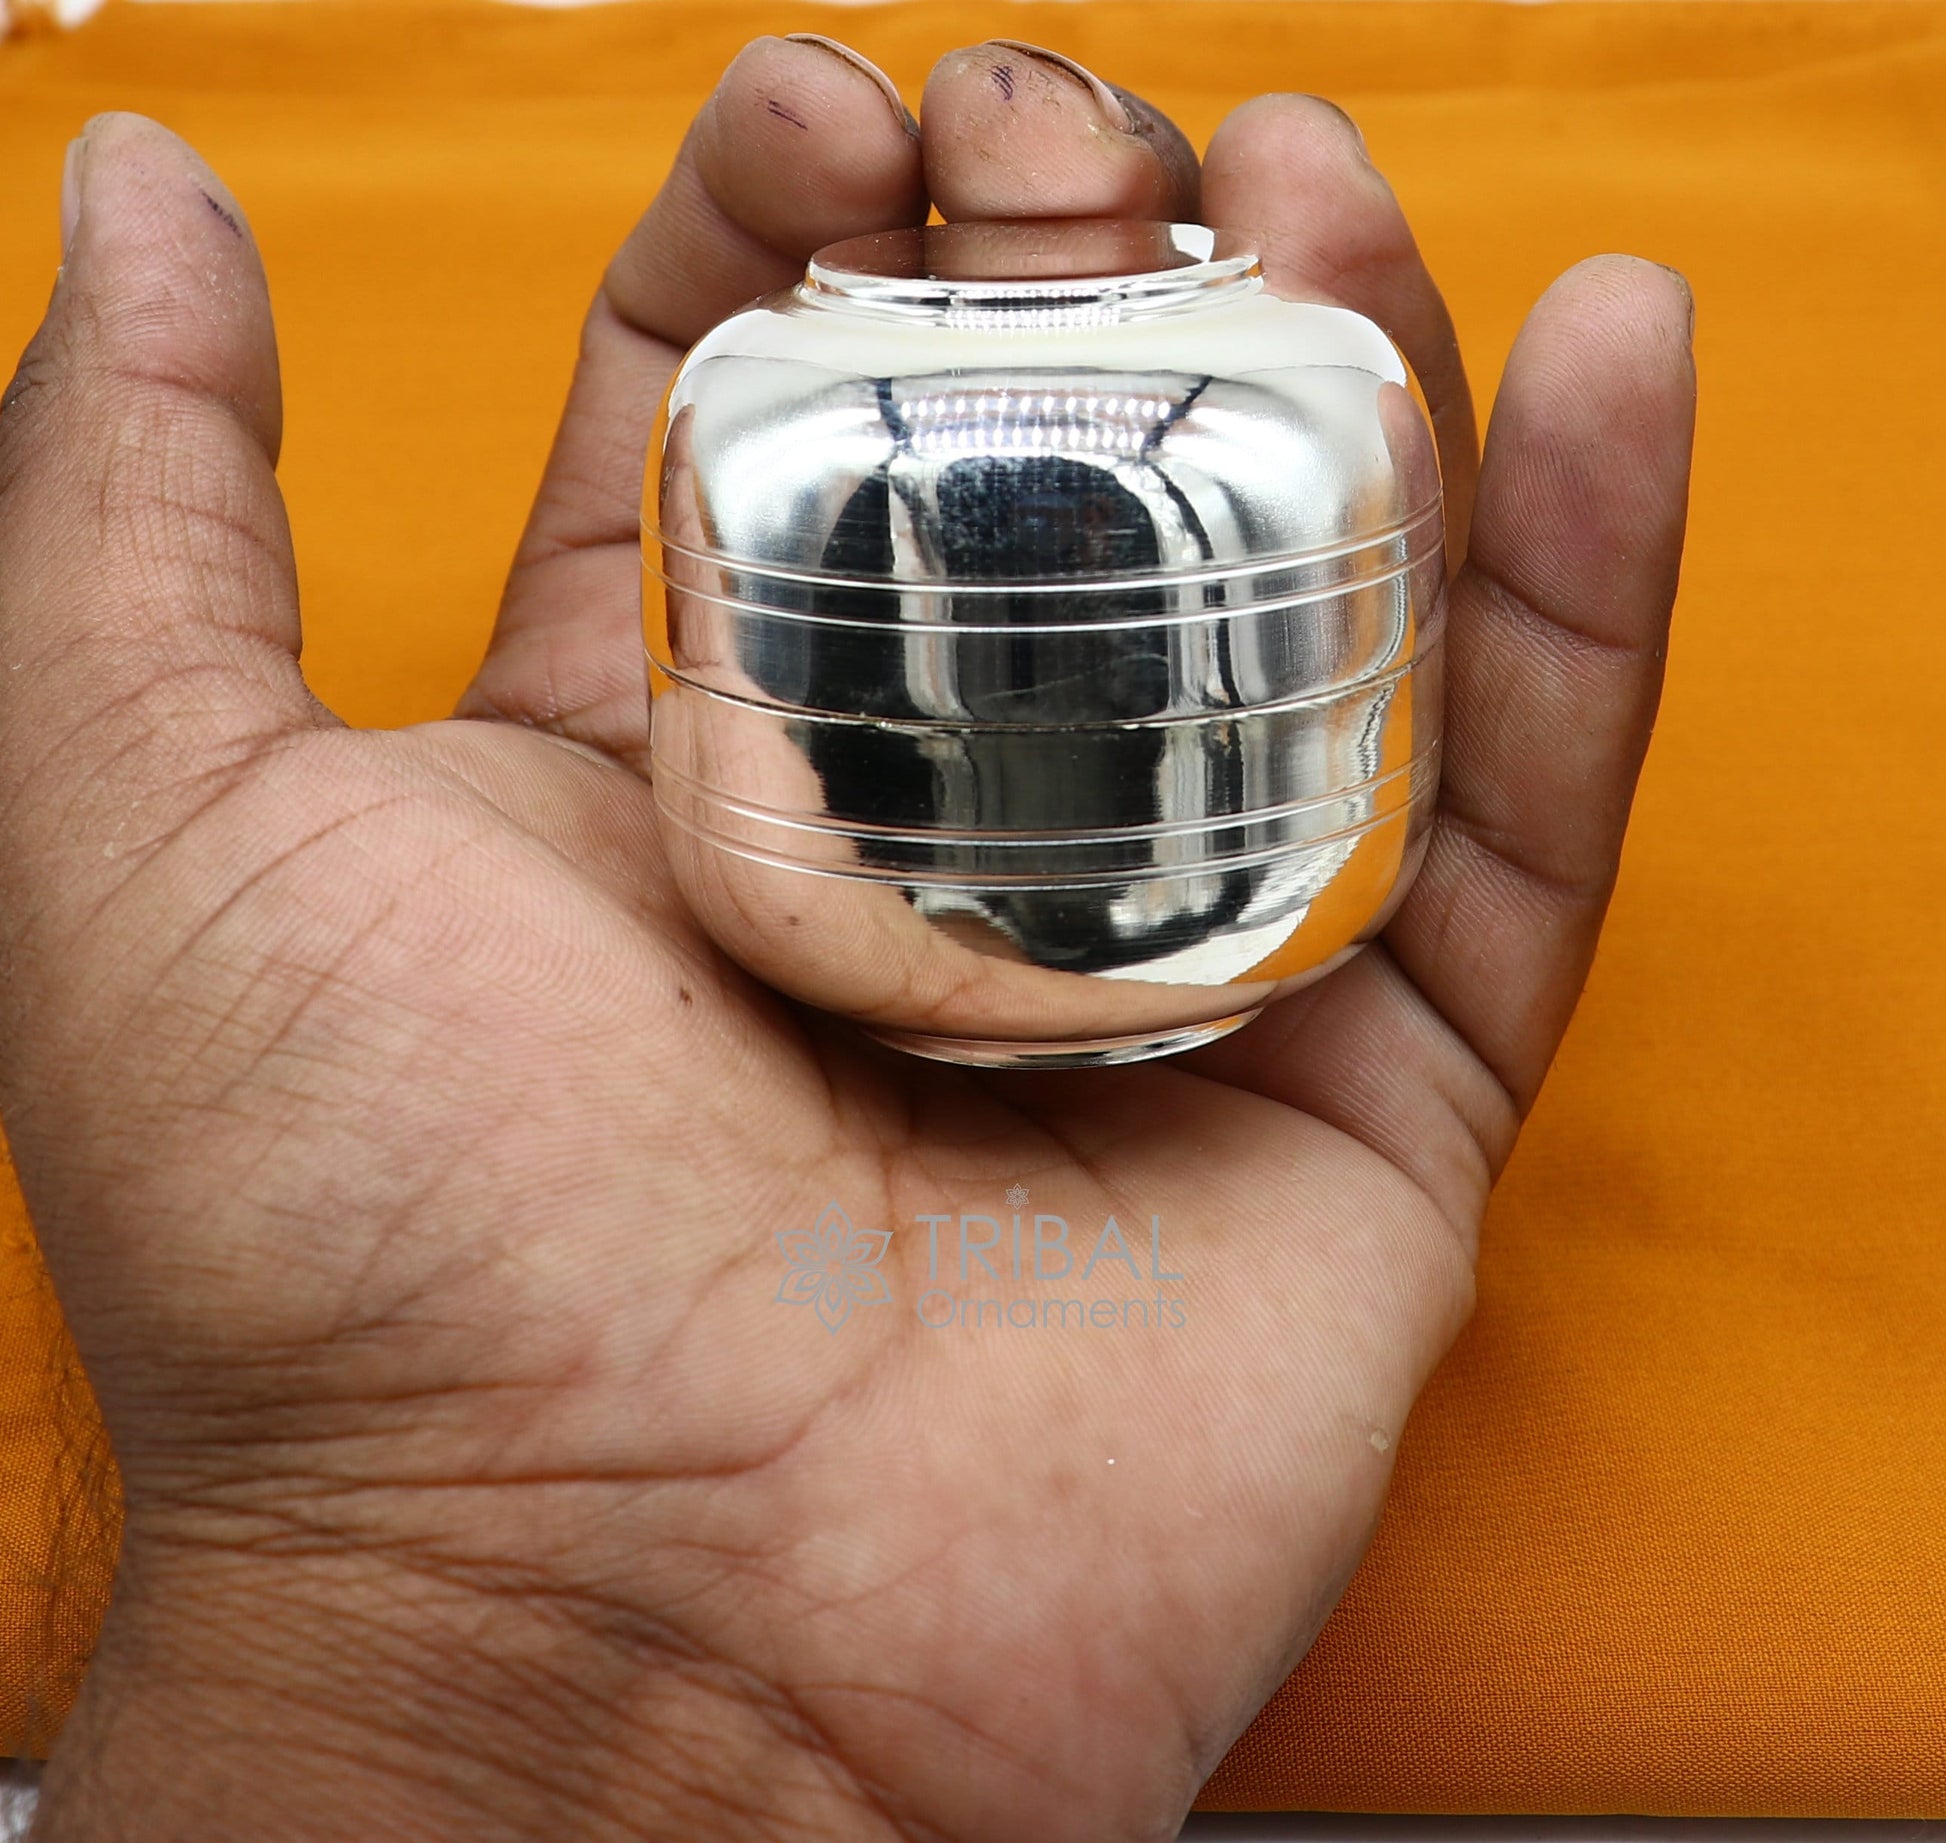 999 fine silver handmade gorgeous small idol's Prasadam box, trinket box, container box, solid silver puja article utensils su1107 - TRIBAL ORNAMENTS